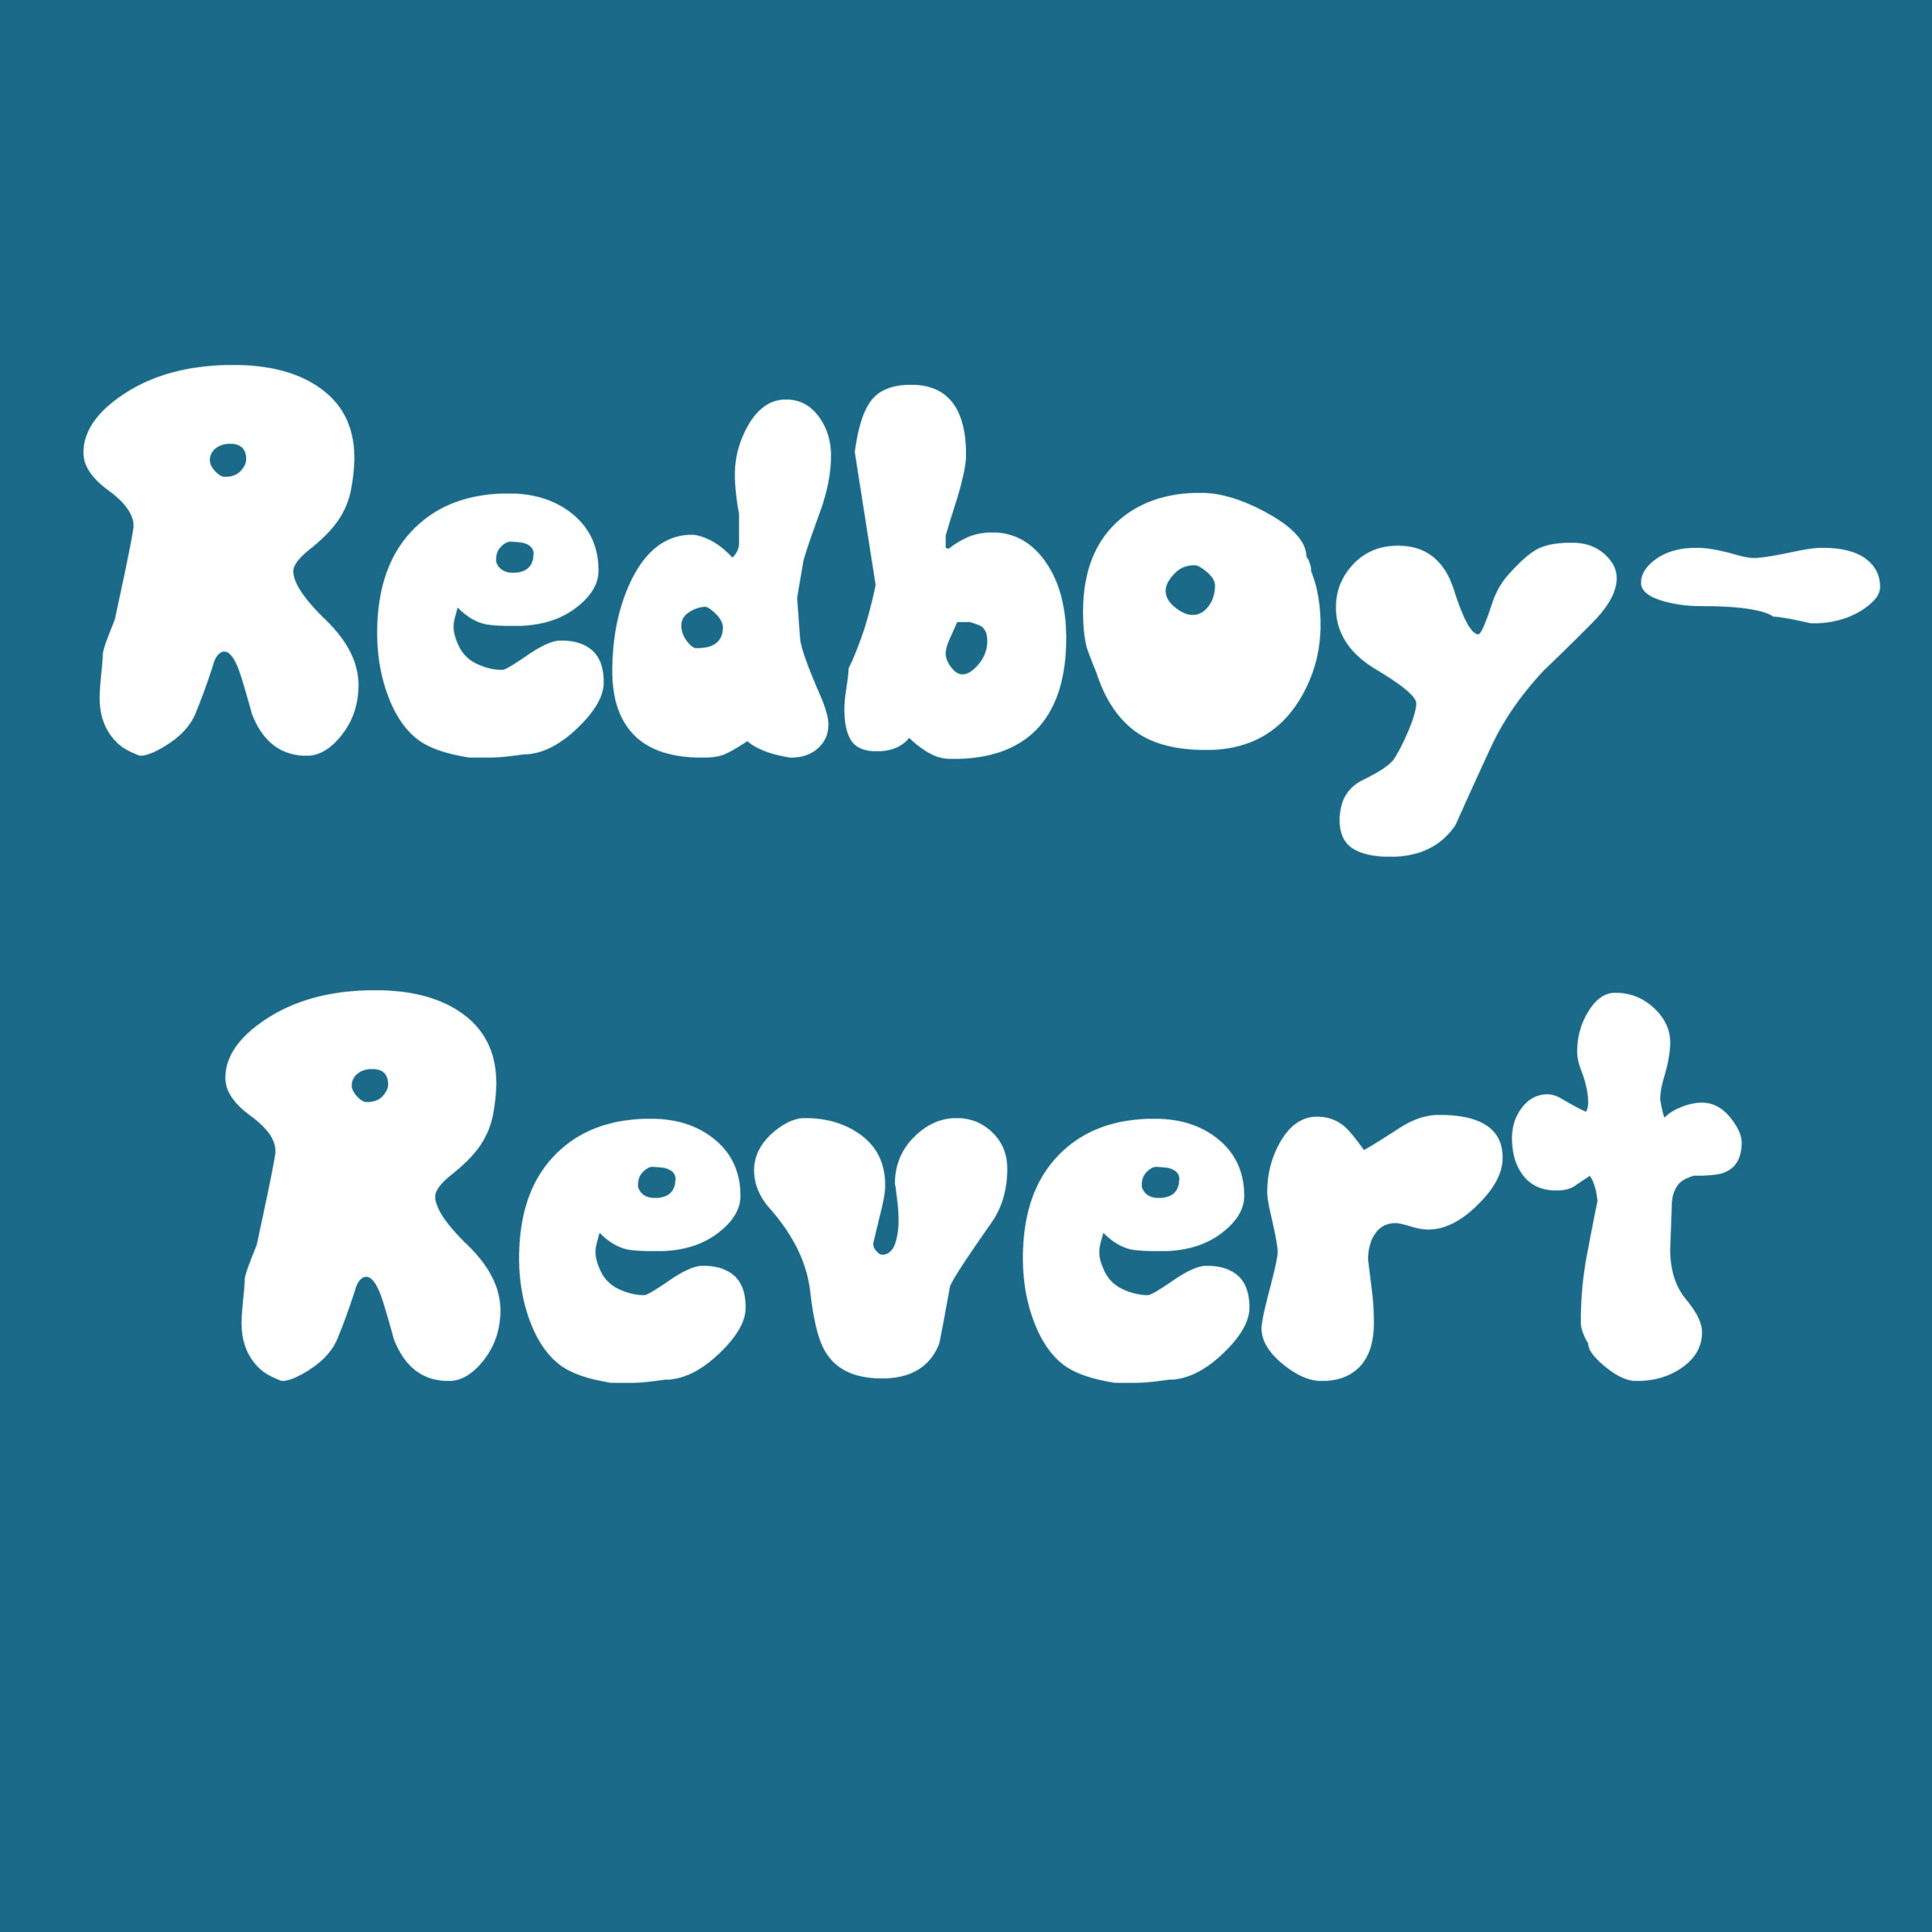 Redboy-Revert P. cubensis spores